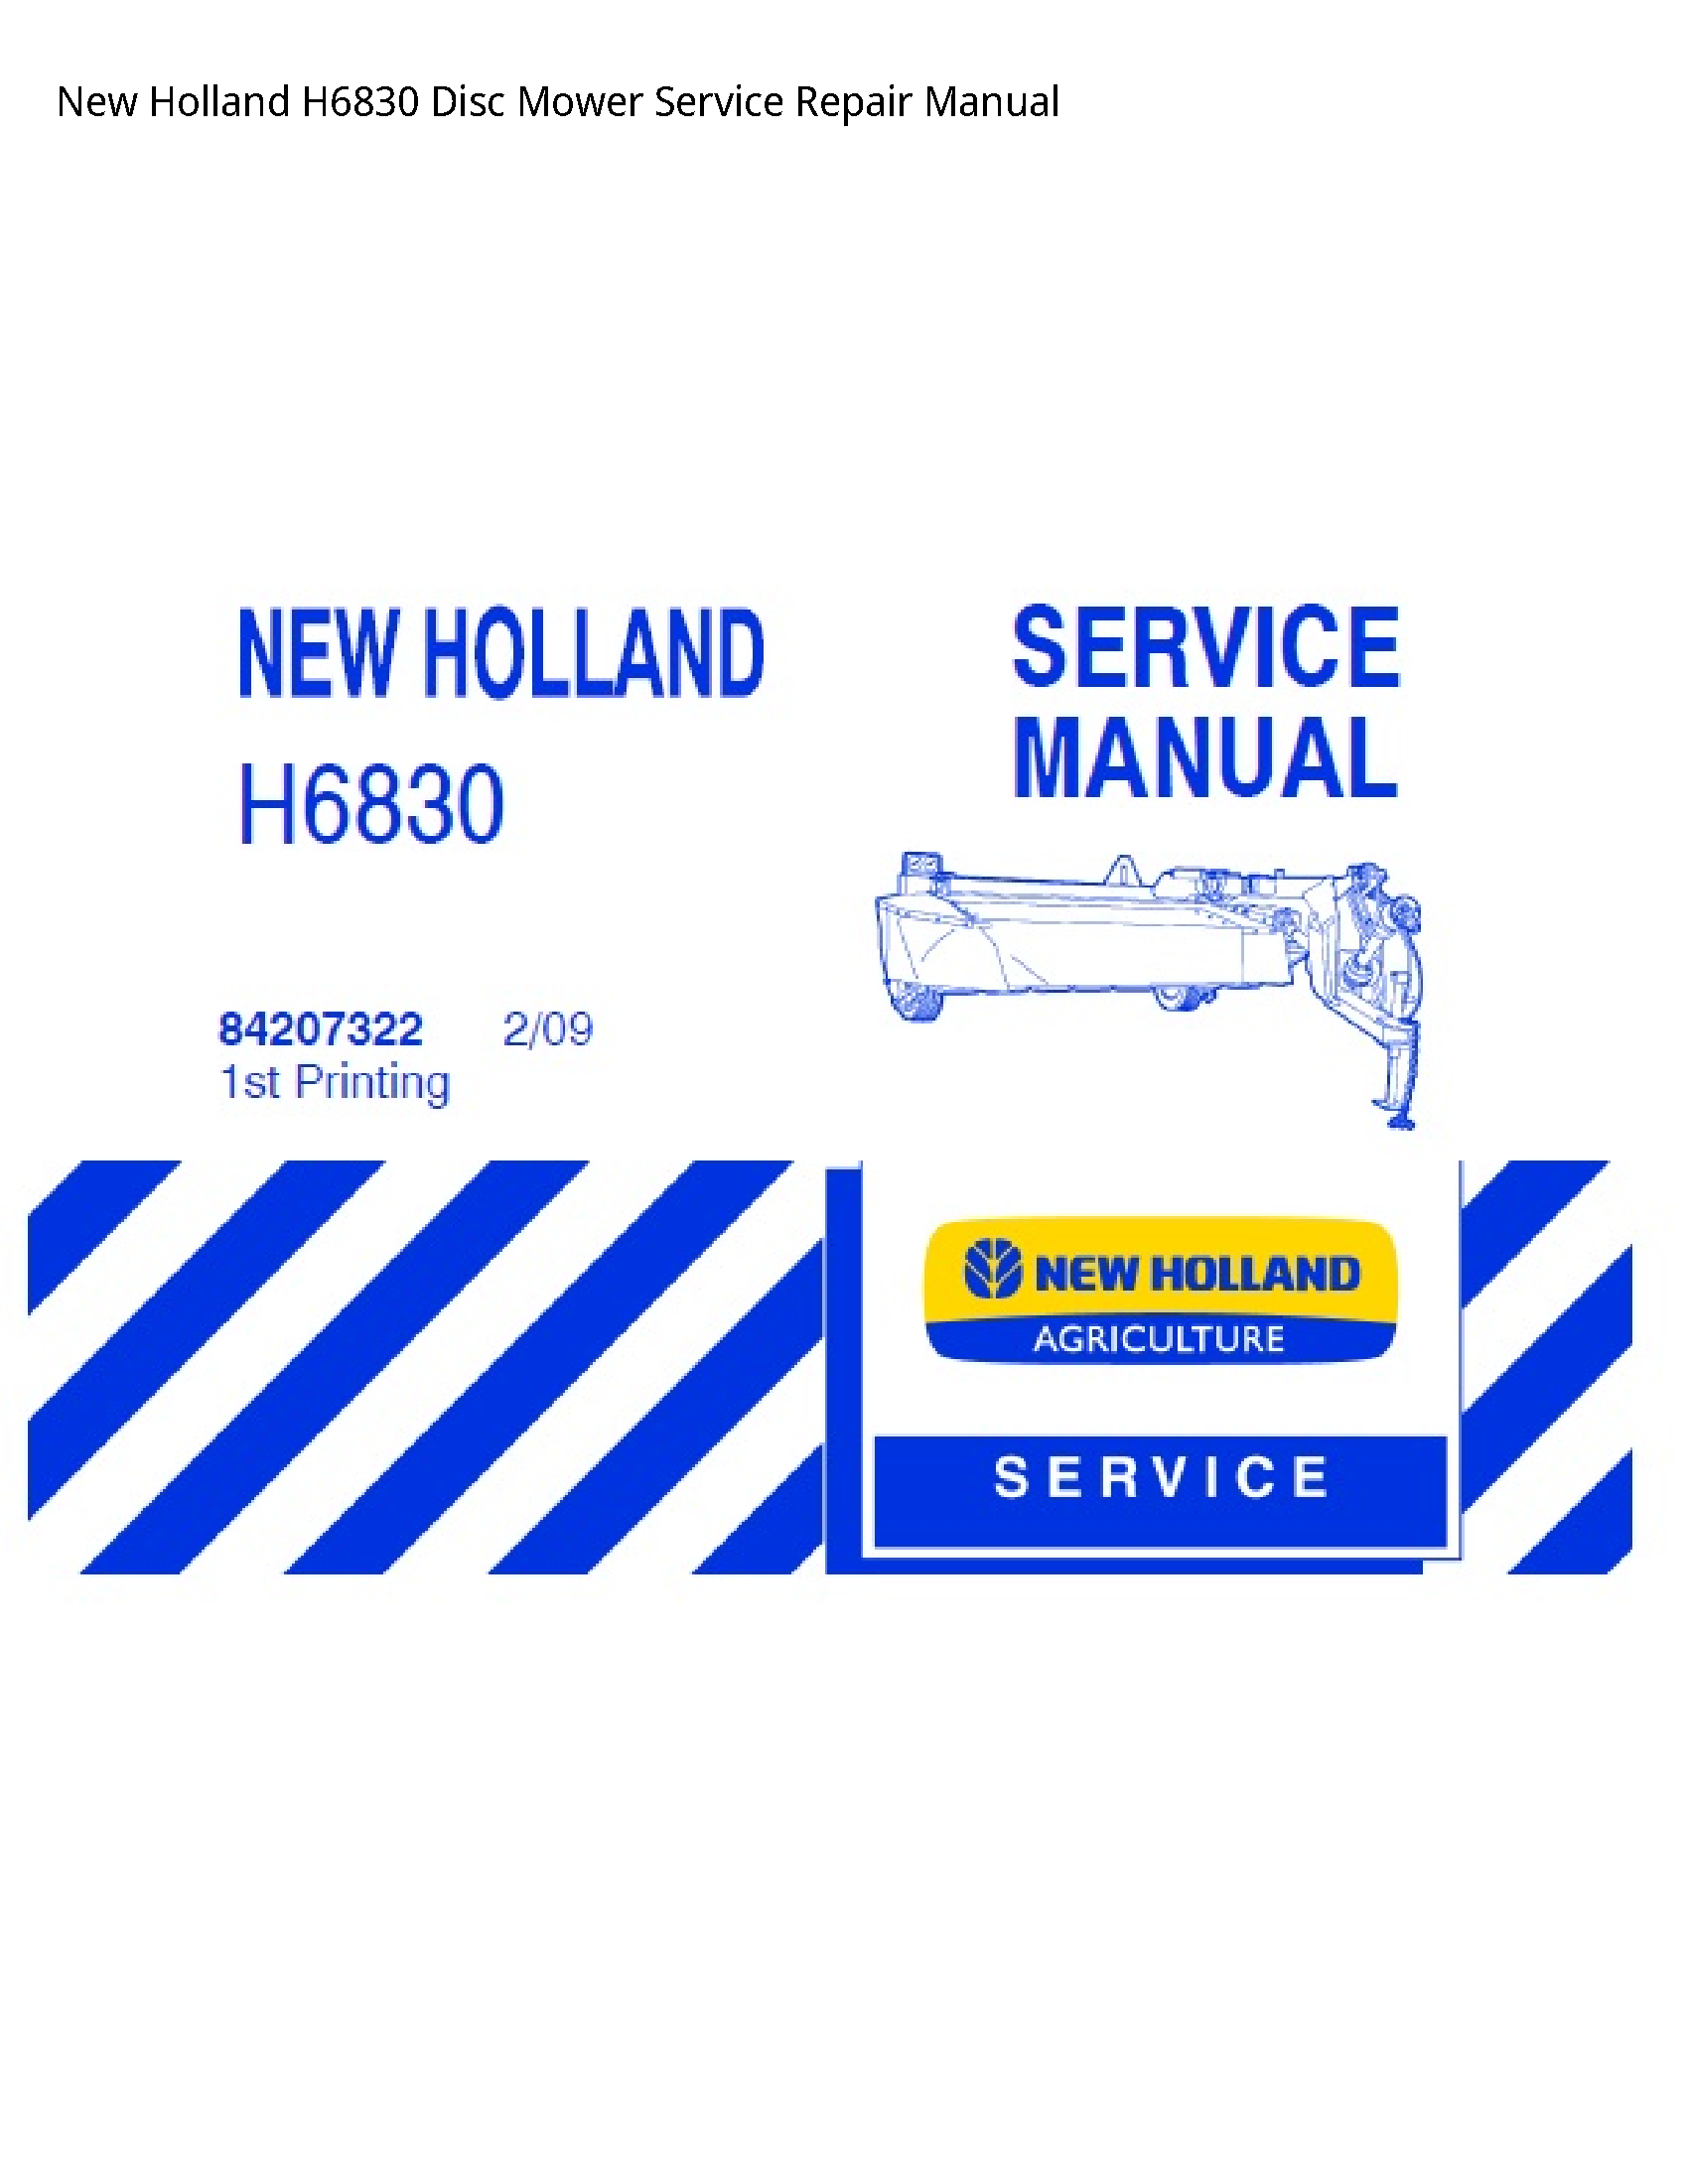 New Holland H6830 Disc Mower manual